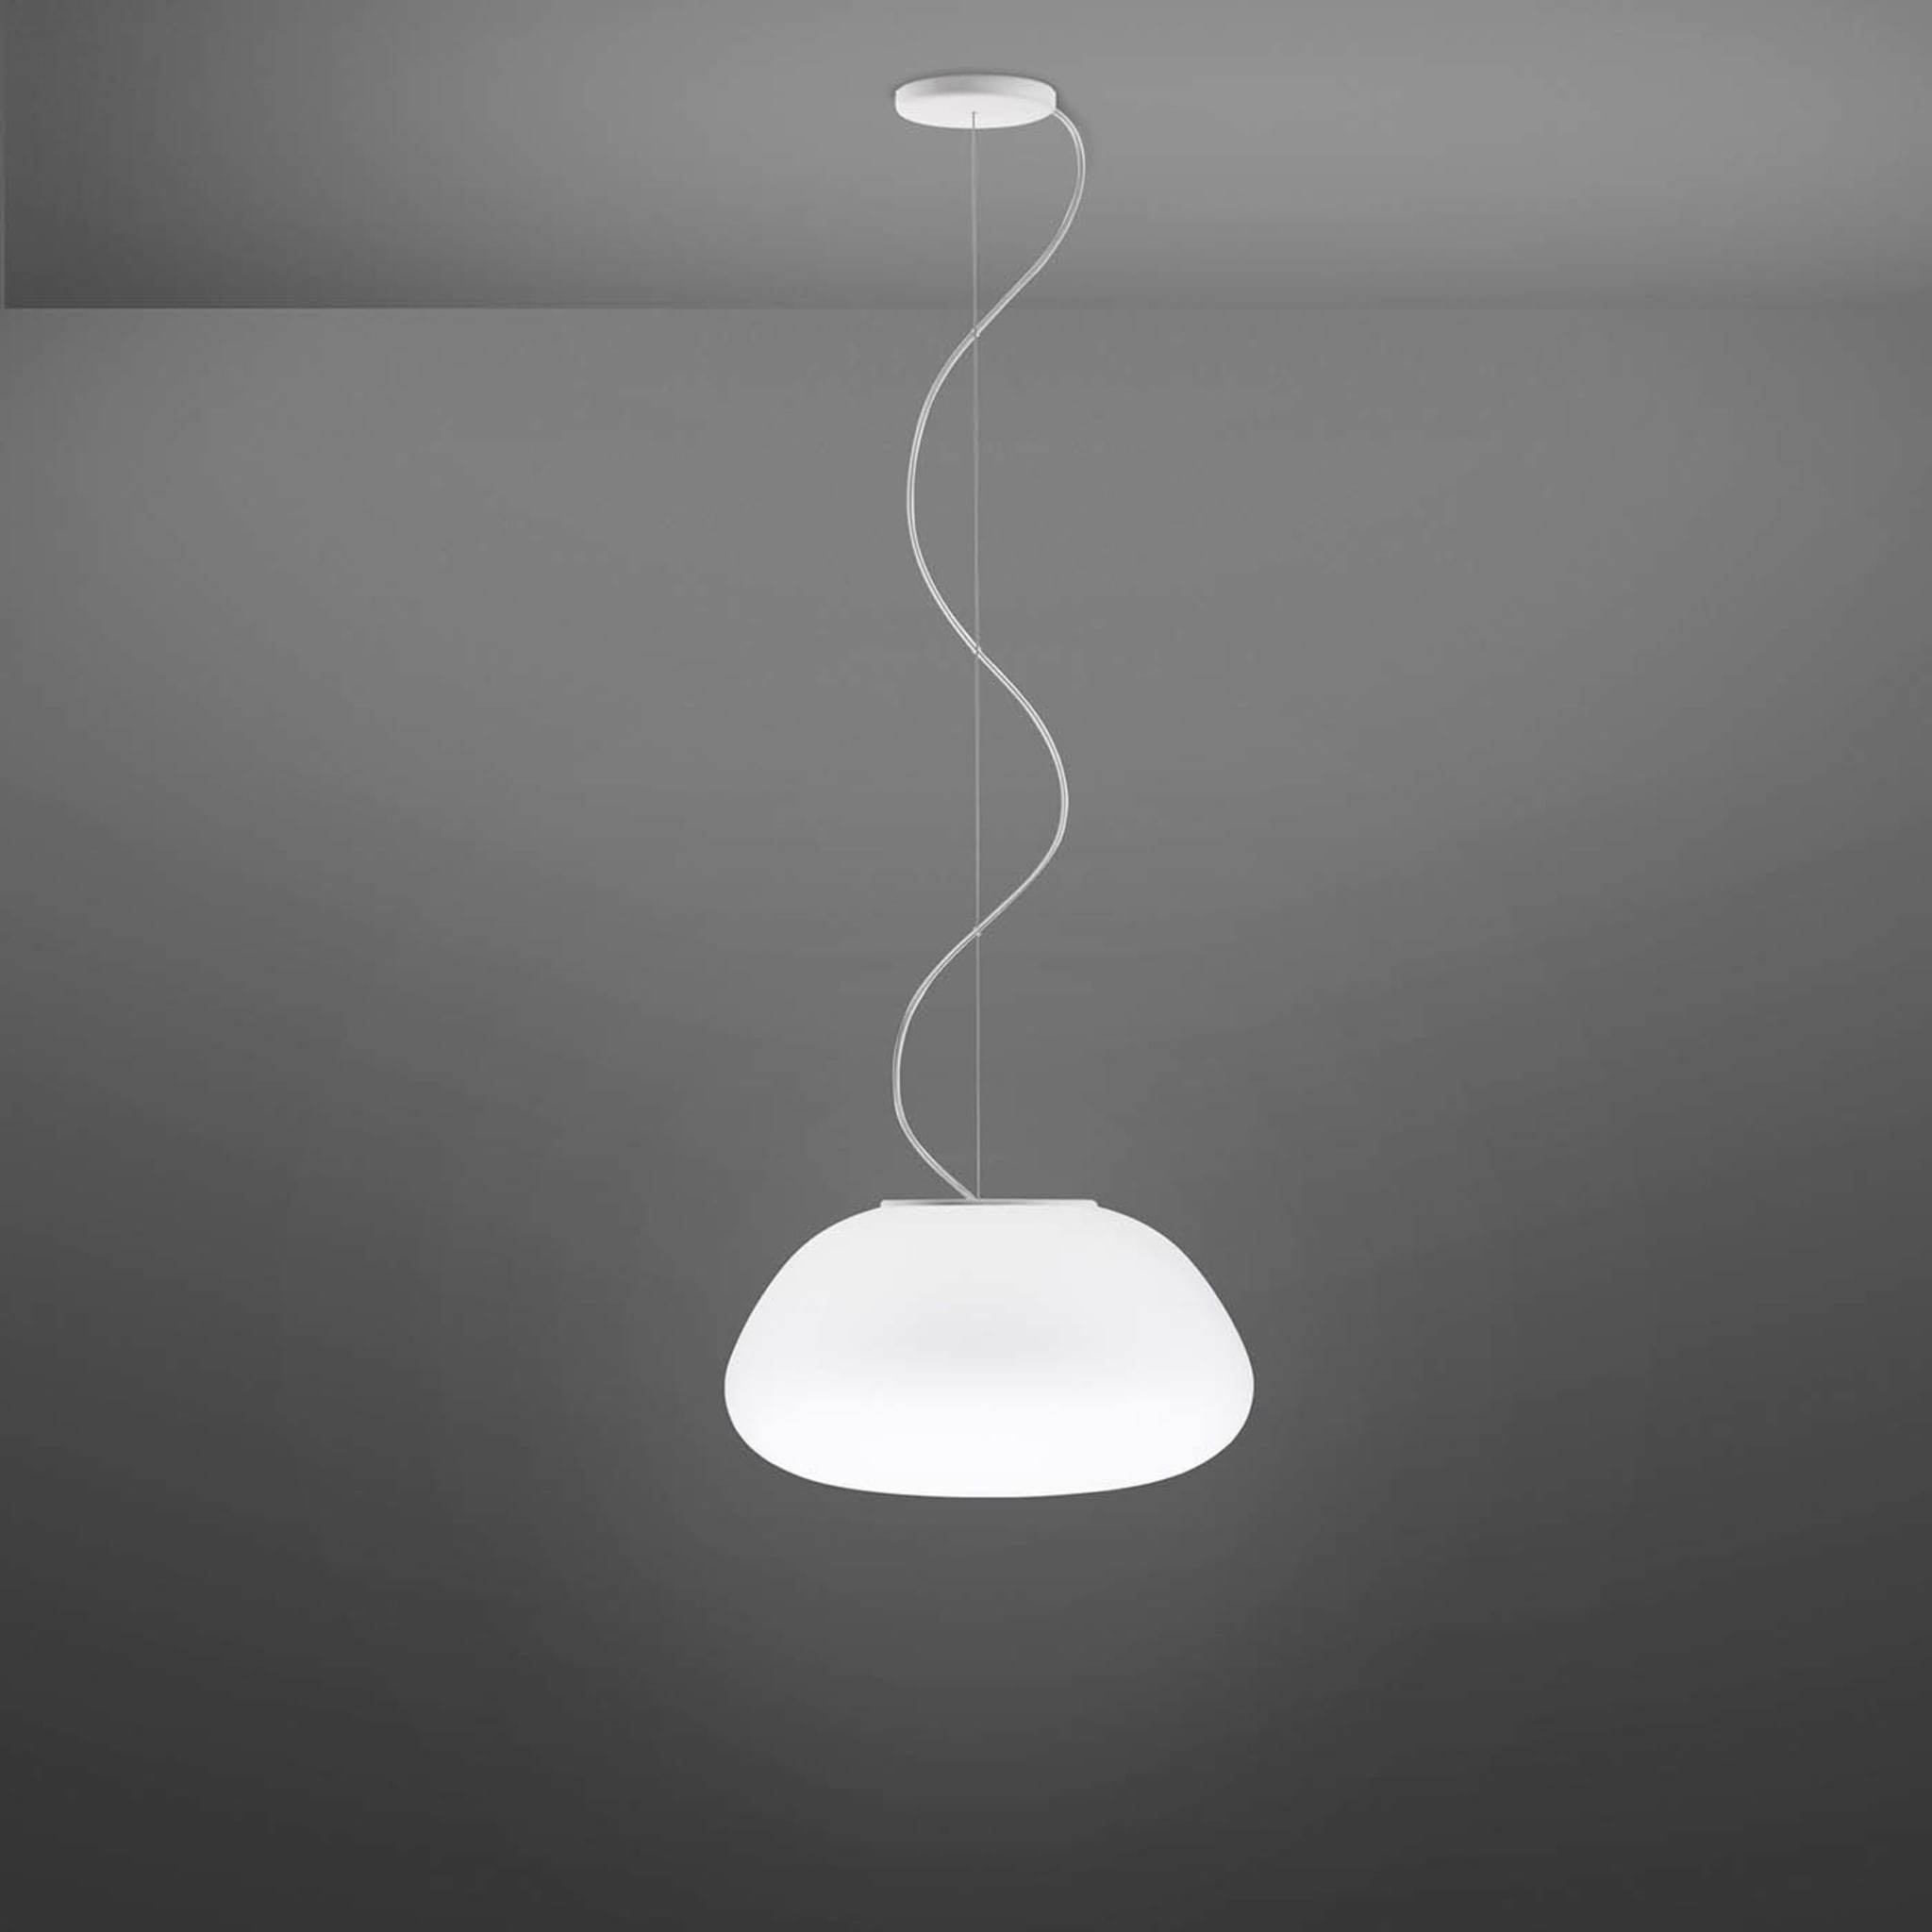 Lumi Poga Pendant Lamp by Saggia & Sommella - Alternative view 1